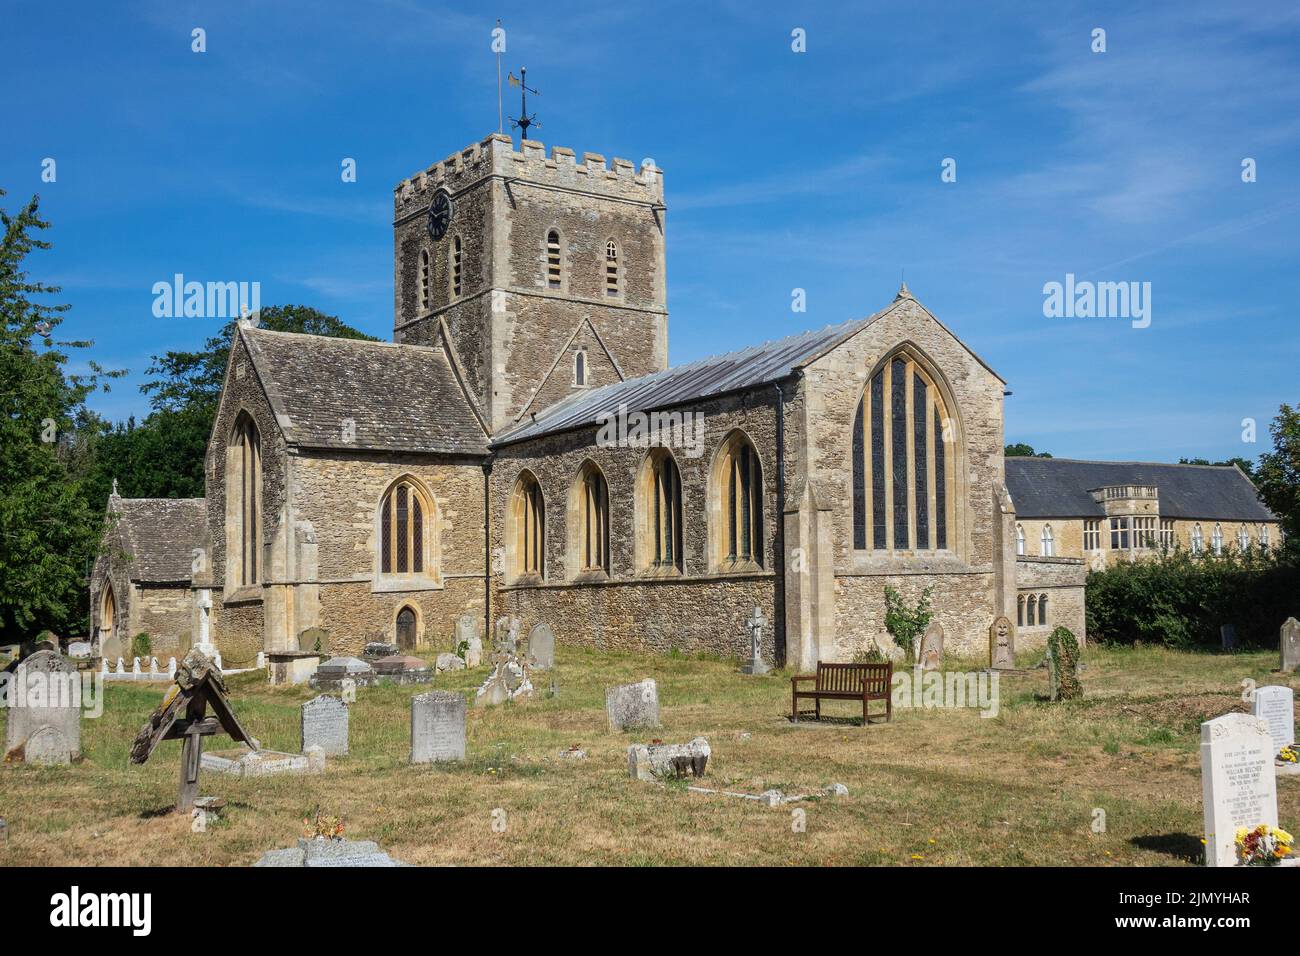 England, Oxfordshire, Buckland church Stock Photo